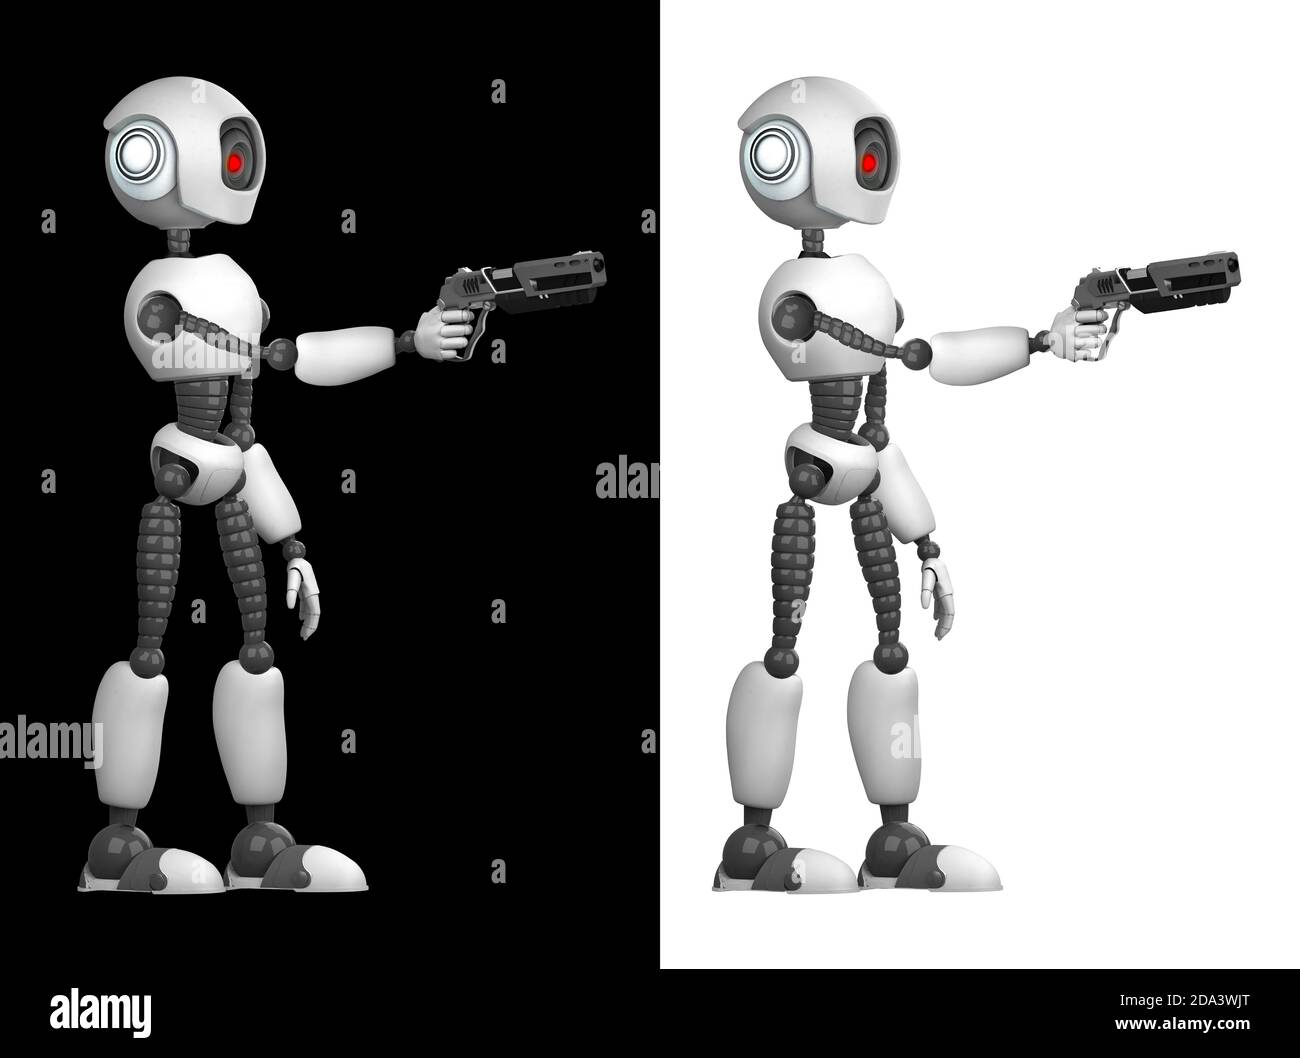 Un robot agresivo humanoide con un arma en sus manos. Aislado sobre fondo blanco y negro. Concepto futuro con robótica e inteligencia artificial Foto de stock